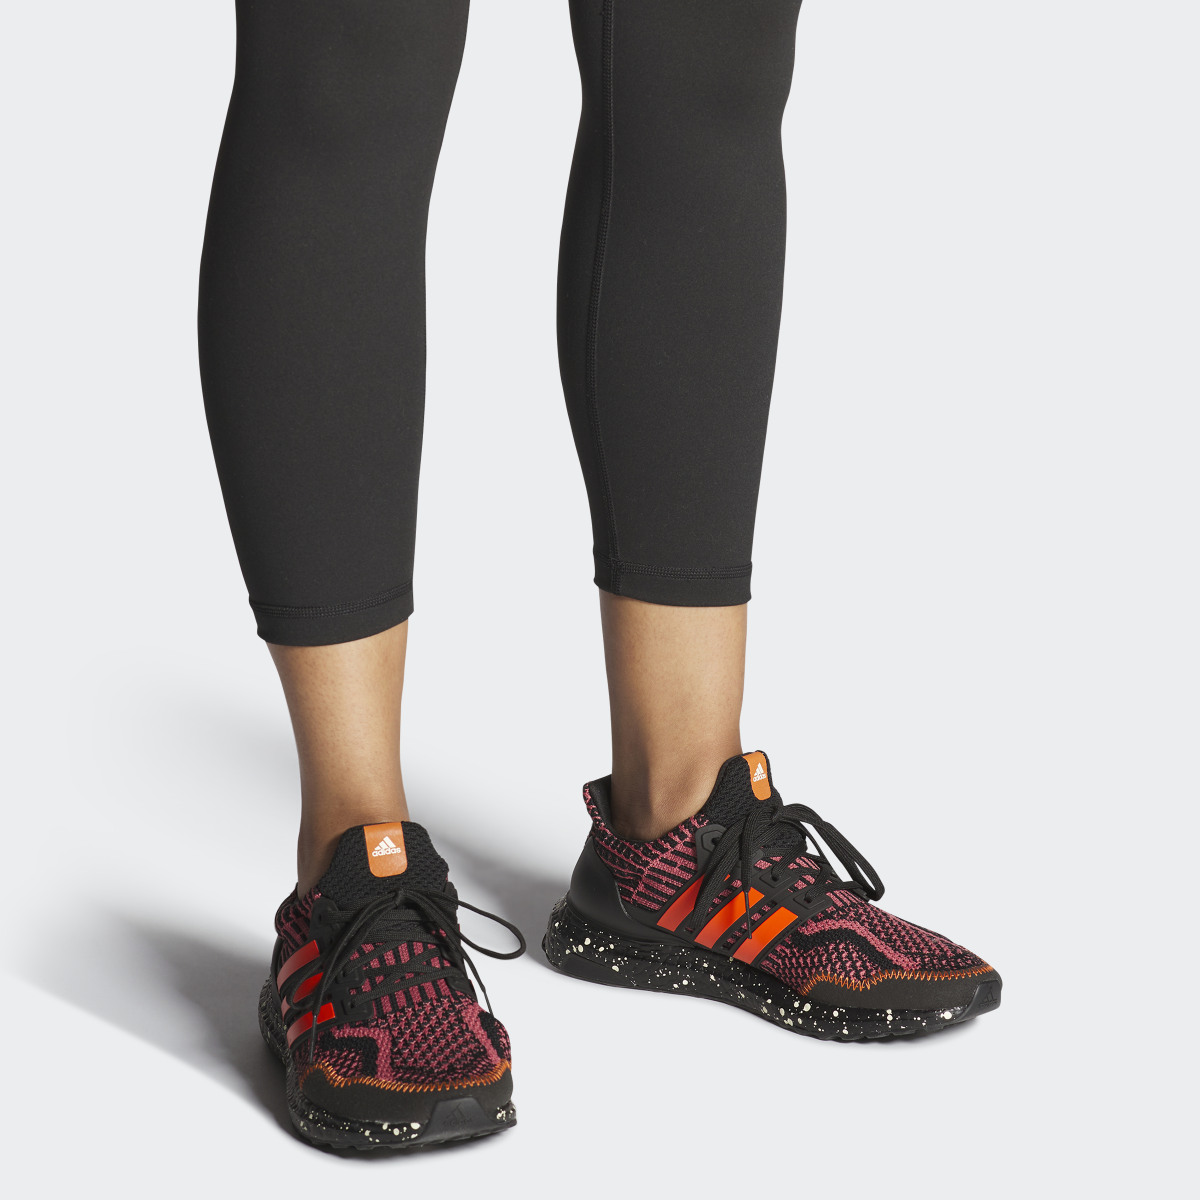 Adidas Ultraboost 5.0 DNA Running Sportswear Lifestyle Shoes. 5